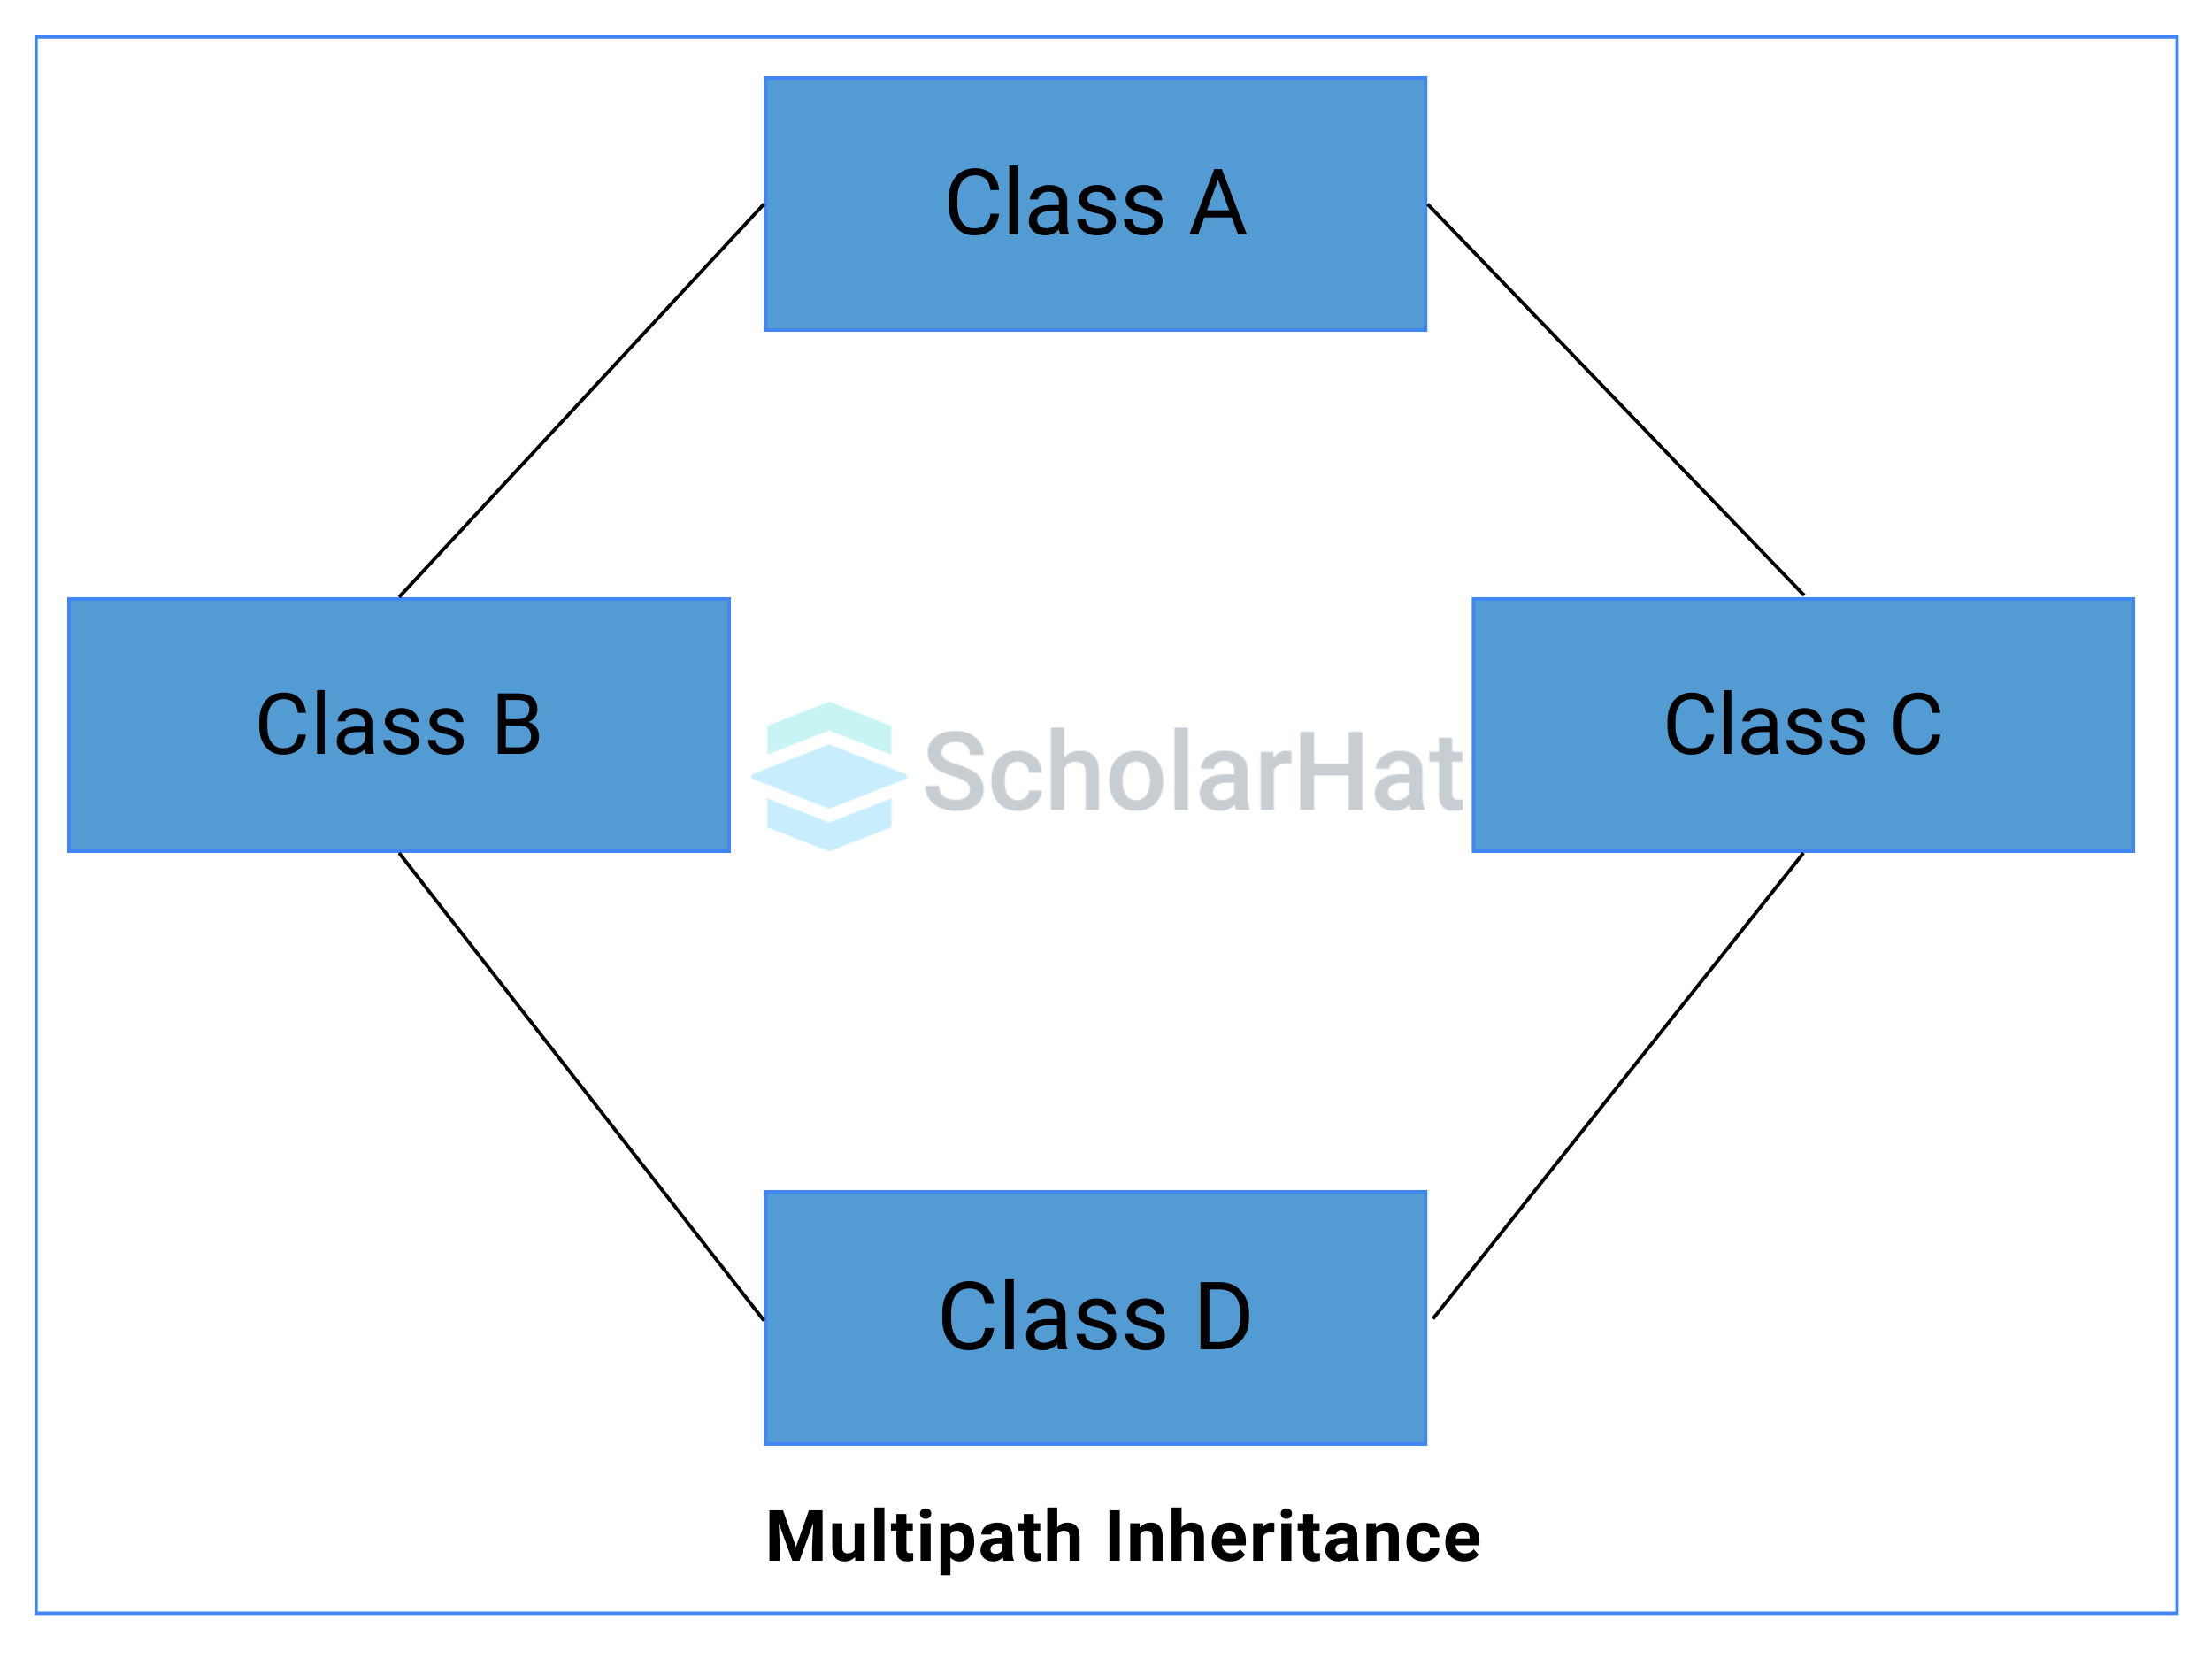 Multipath Inheritance